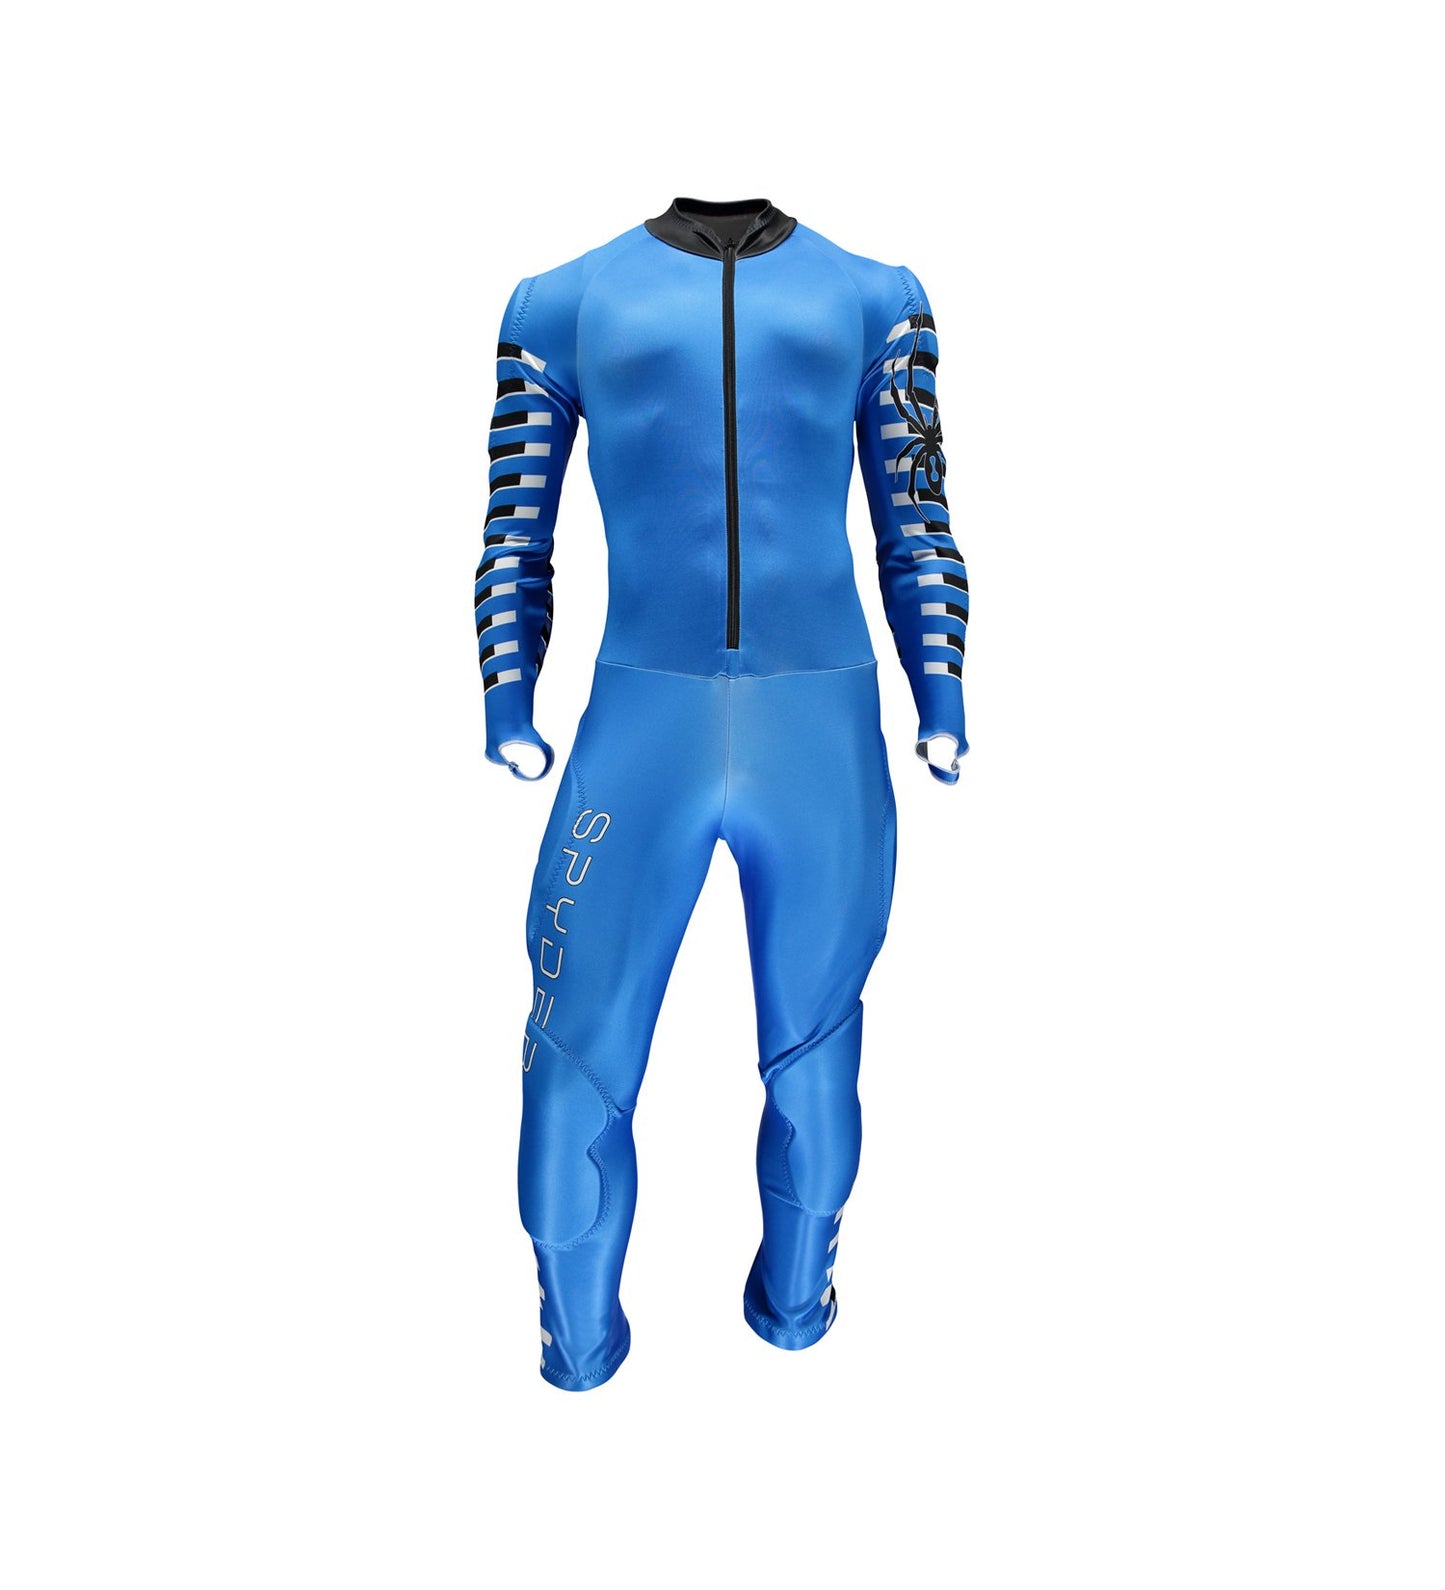 Spyder Performance GS Boys Race Suit 2019